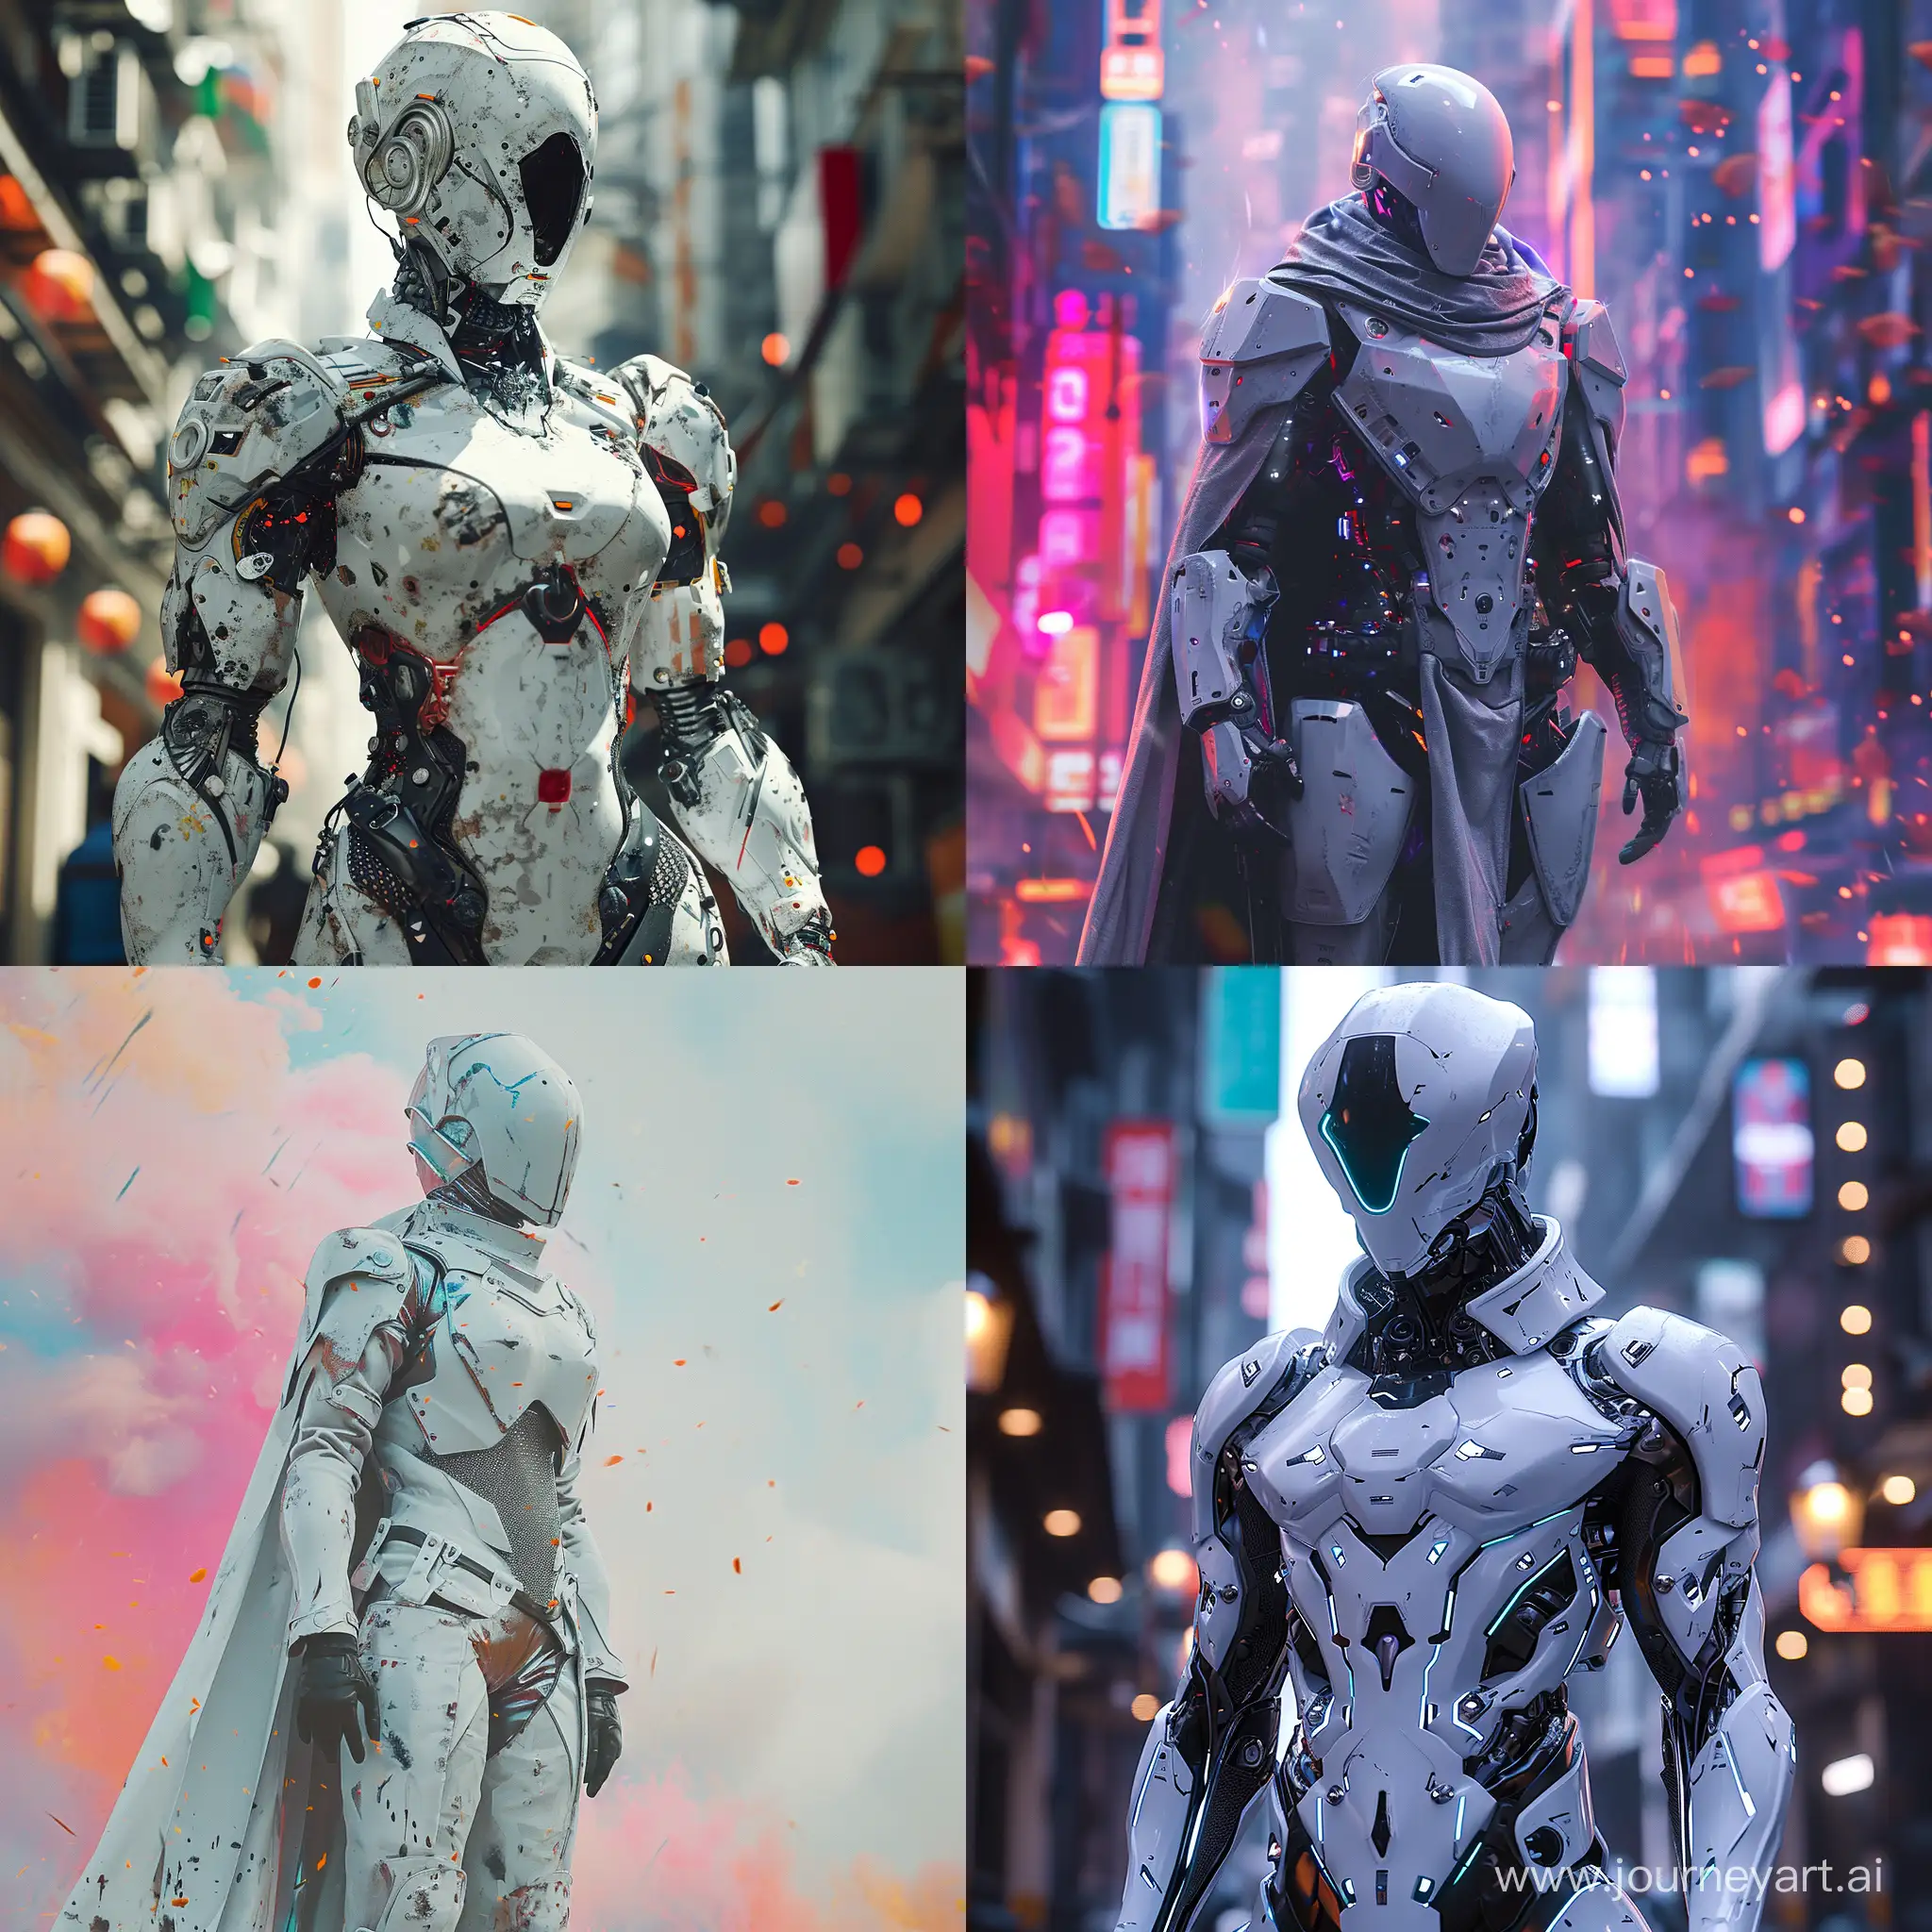 Futuristic-Cybernetic-White-Knight-in-Explosive-Cyberpunk-Scene